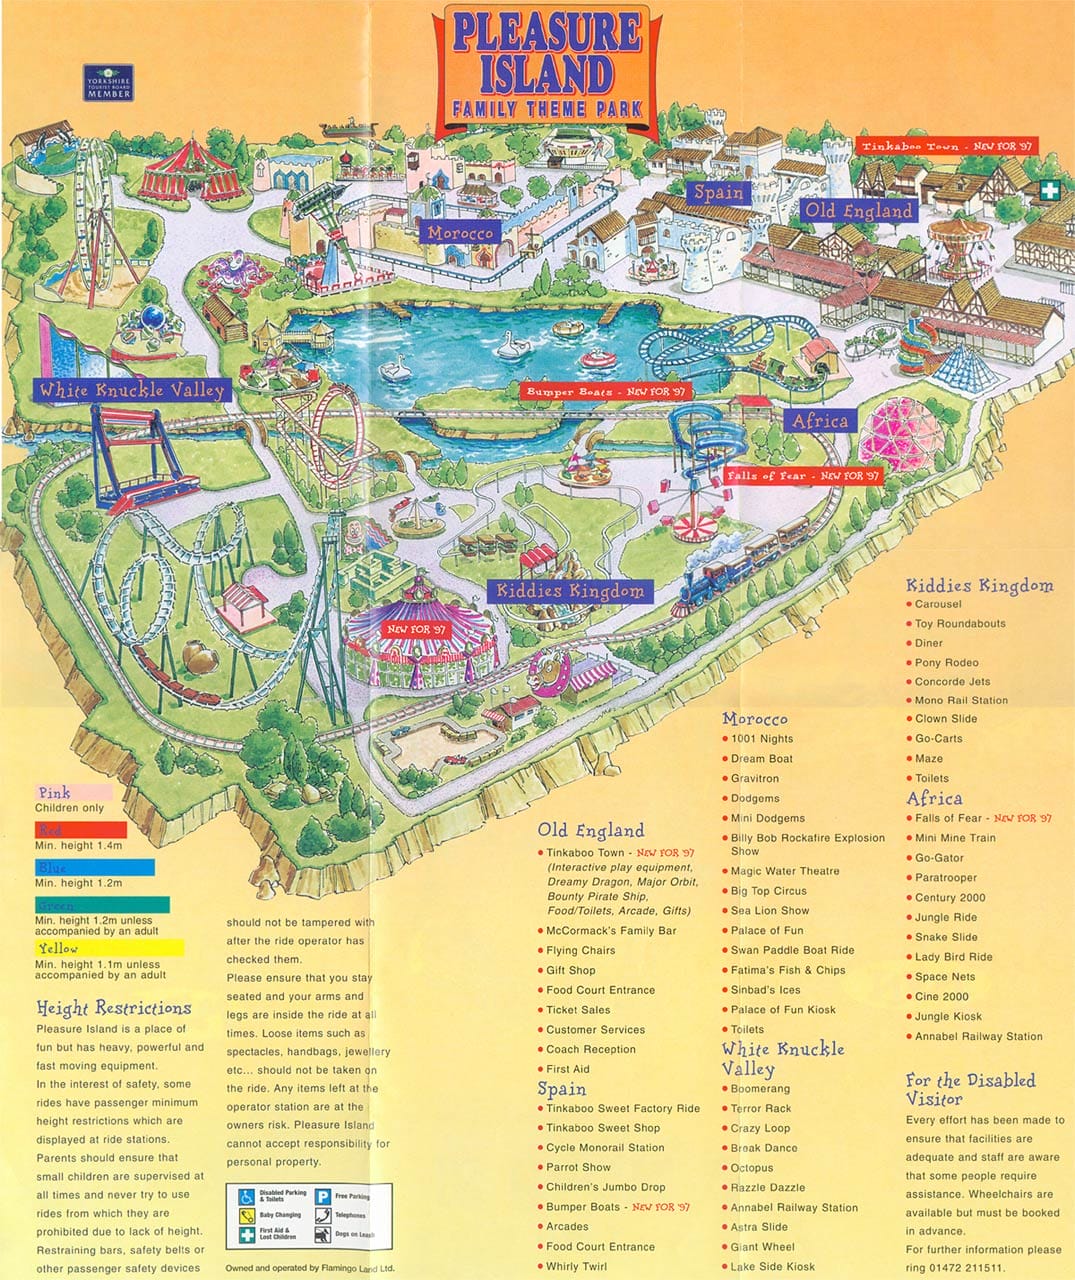 Pleasure Island Family Theme Park Map and Brochure (1997)